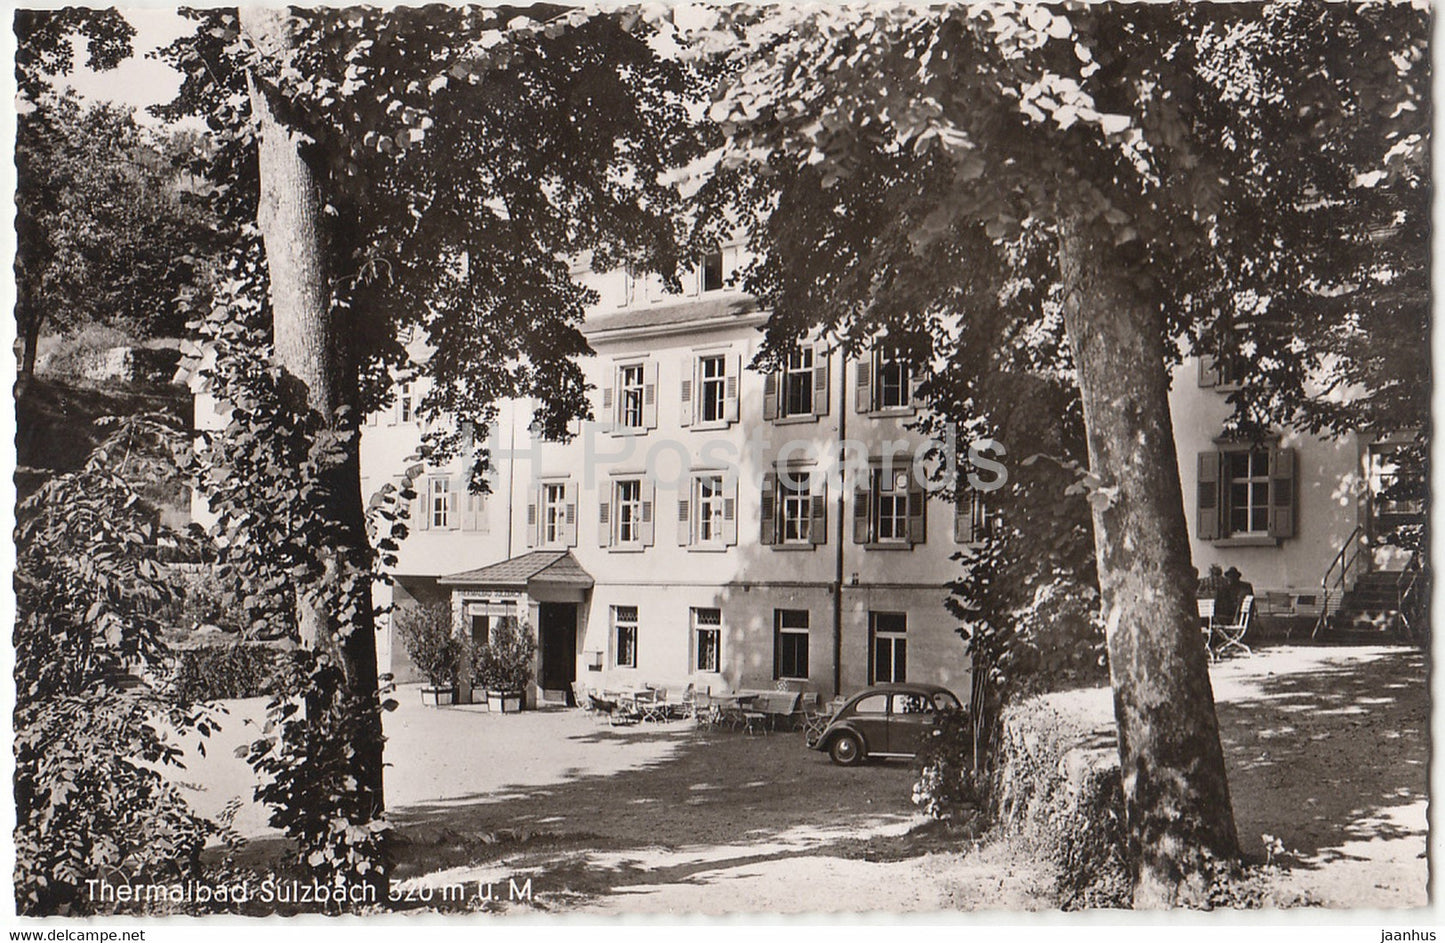 Thermalbad Sulzbach 320 m - Muntner Schumann Heim - car Volkswagen Beetle - Germany - unused - JH Postcards